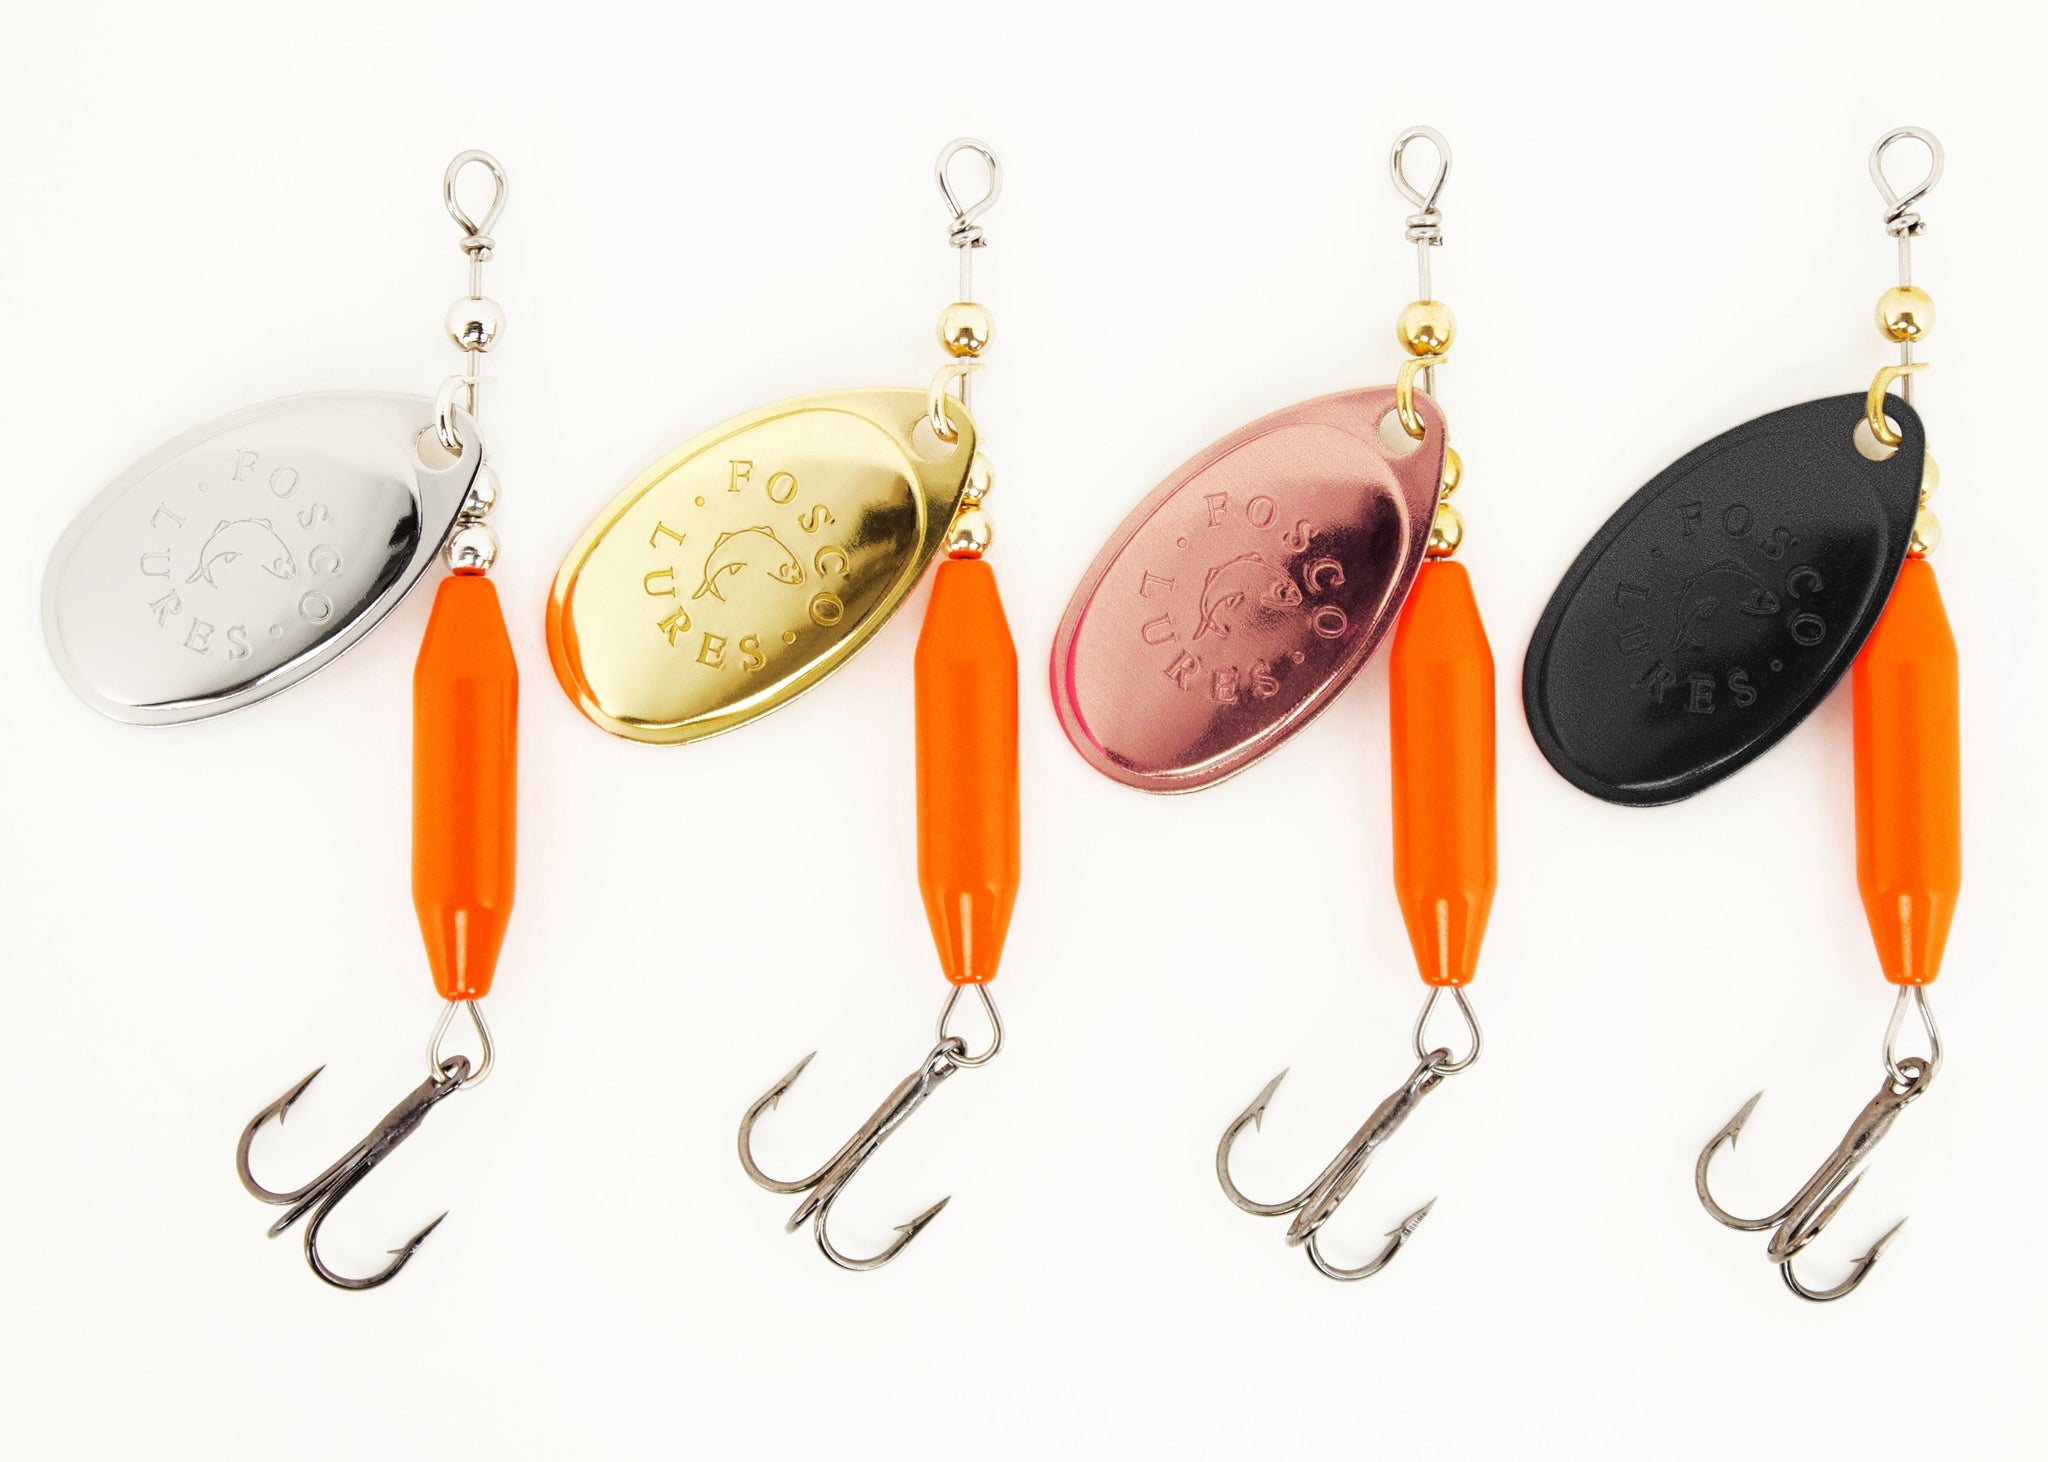 Fosco Handmade Fishing Lures • Brite Orange Inline Spinner • Made By Hand In  Canada – Fosco Fishing Lures